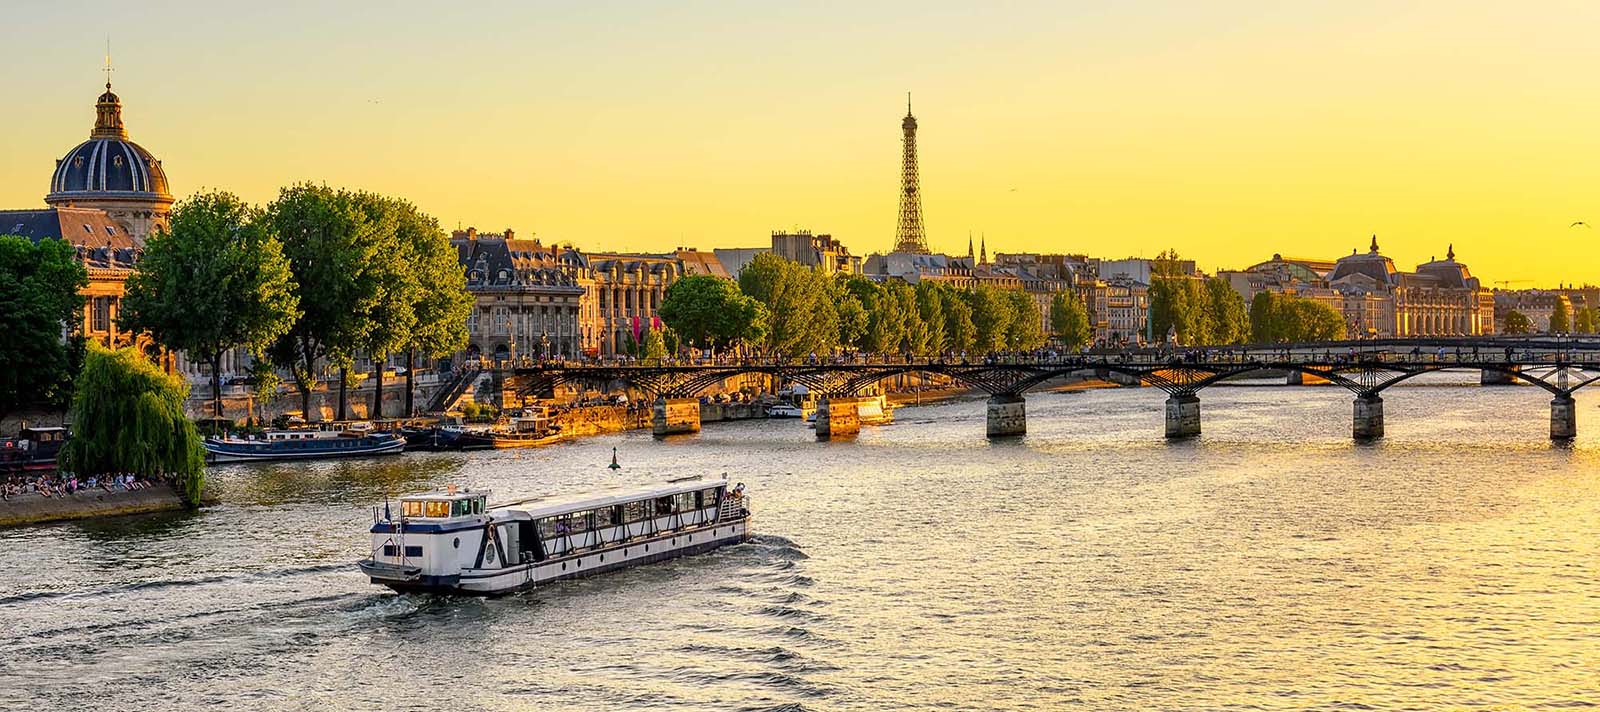 paris sunset river cruise tickets | Paris Whatsup